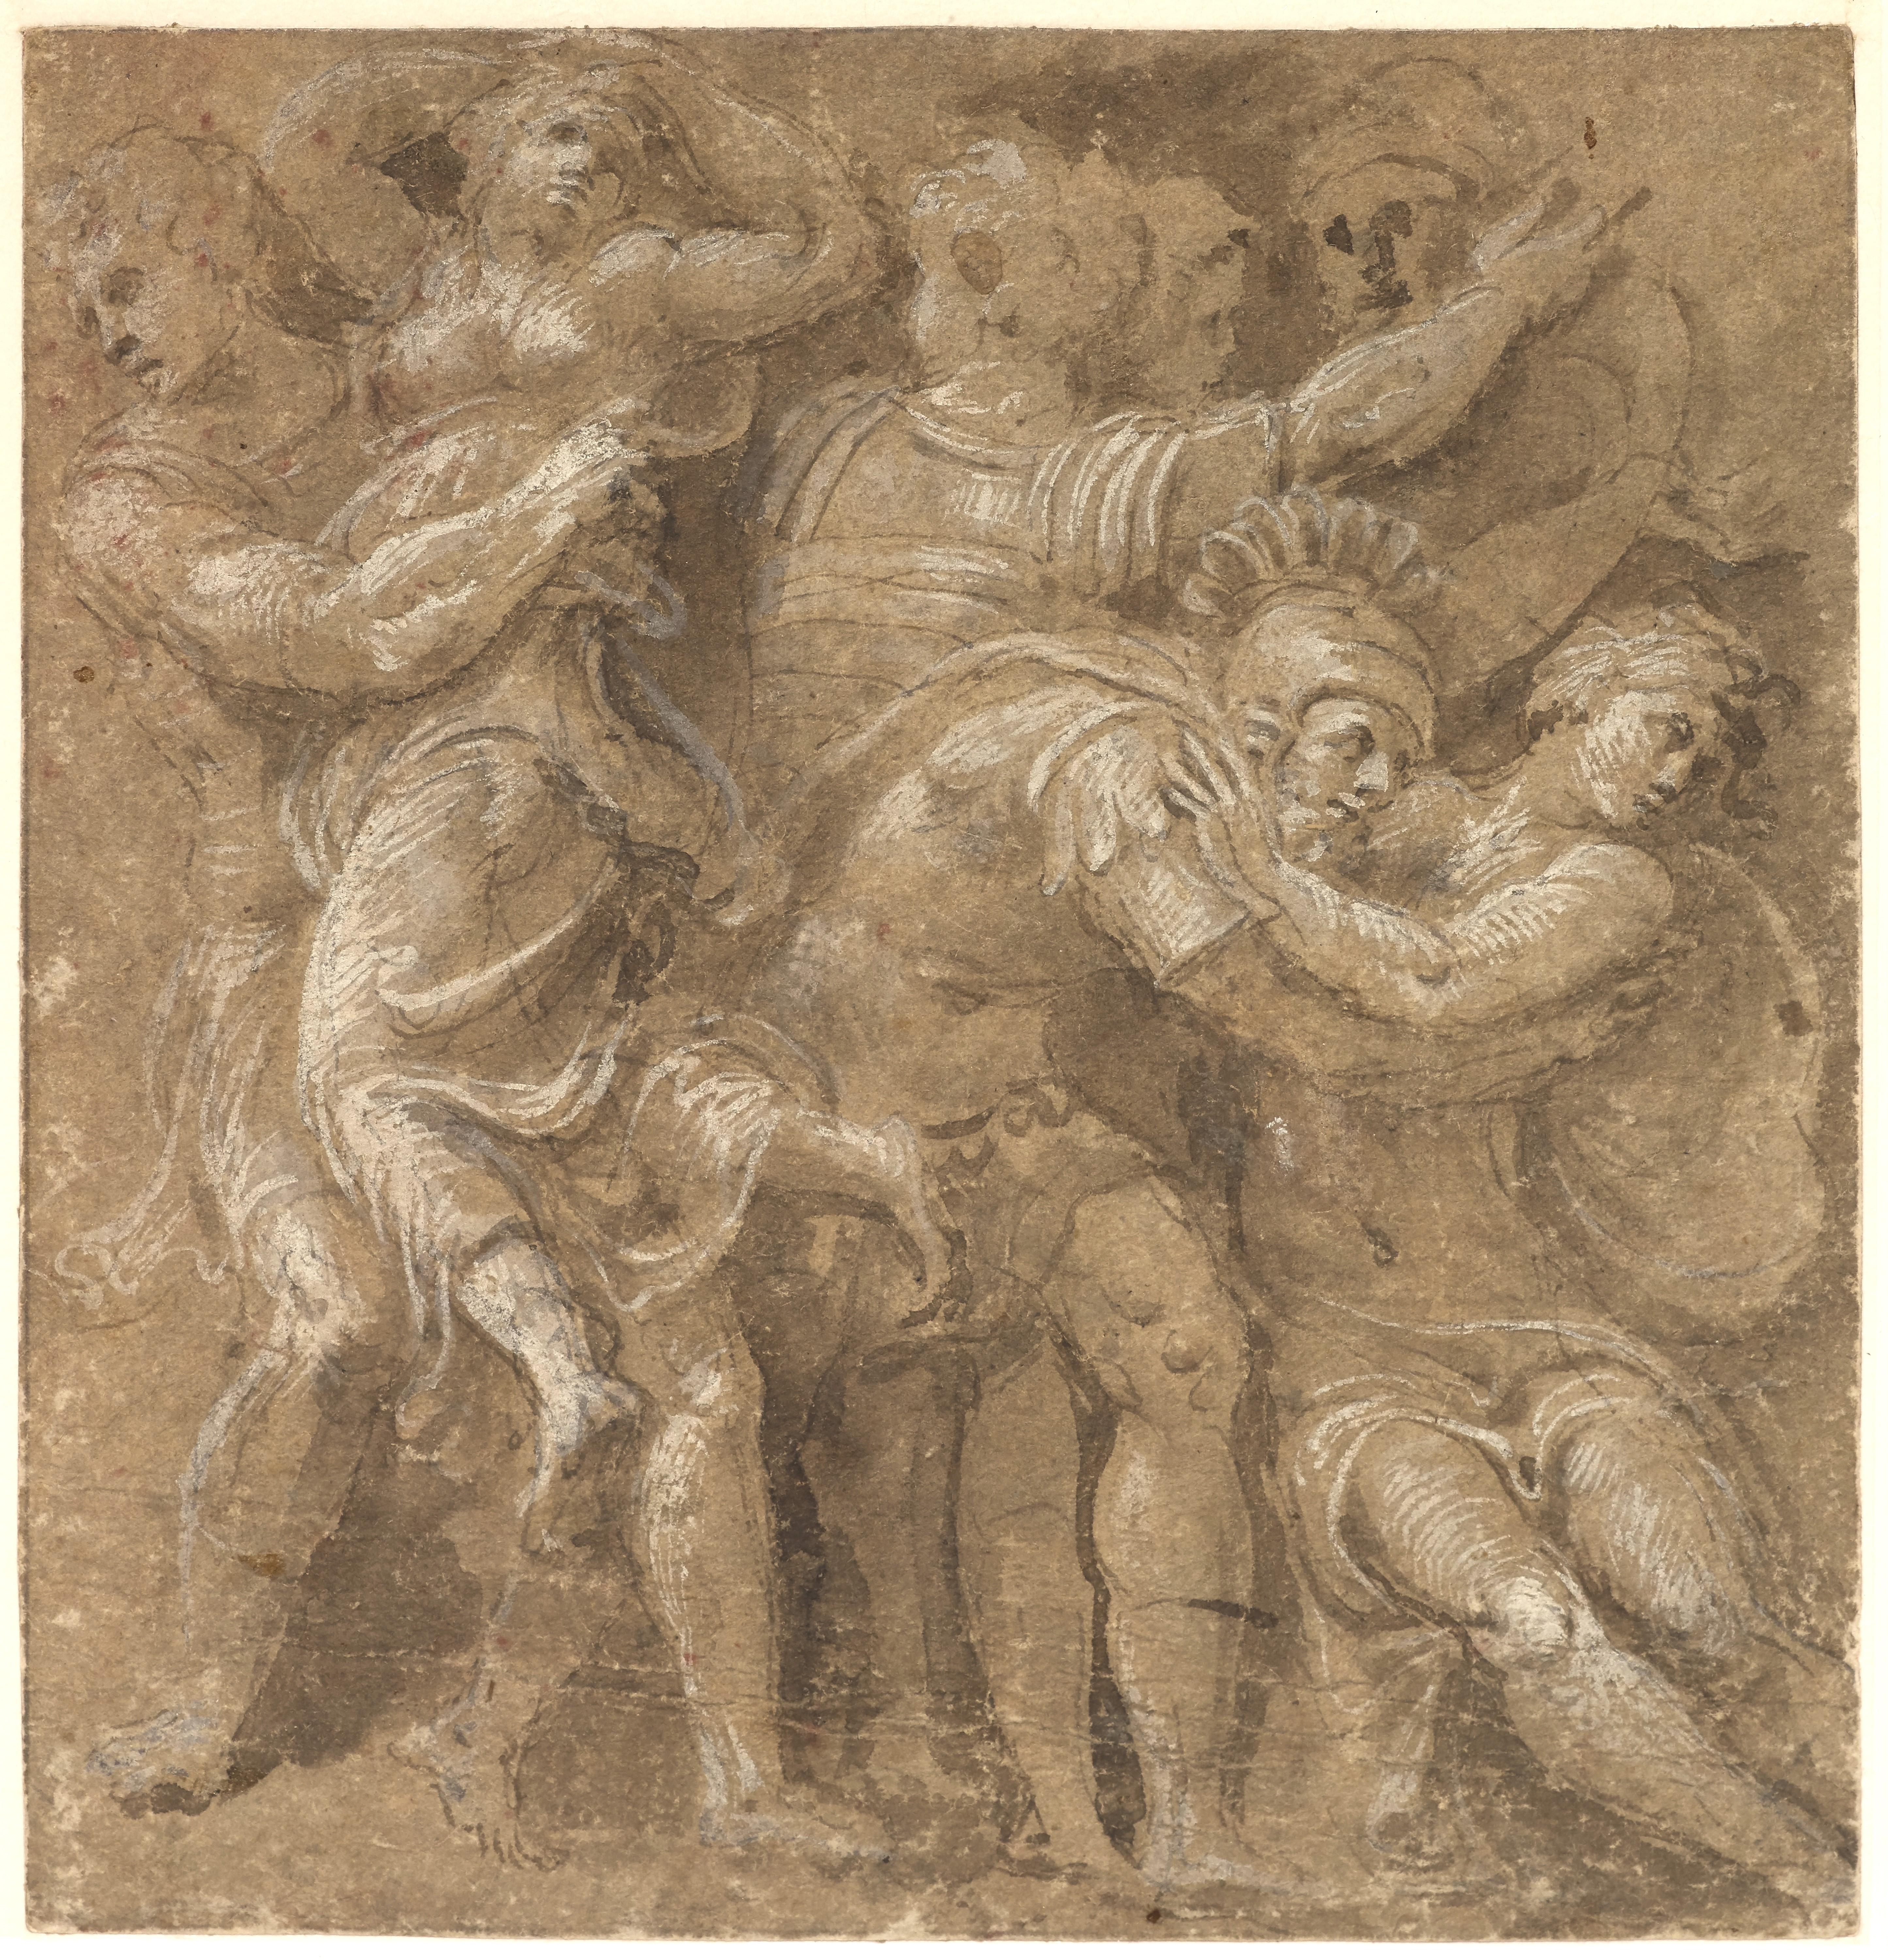 L'enlèvement des Sabines , un dessin de la Renaissance de Biagio Pupini